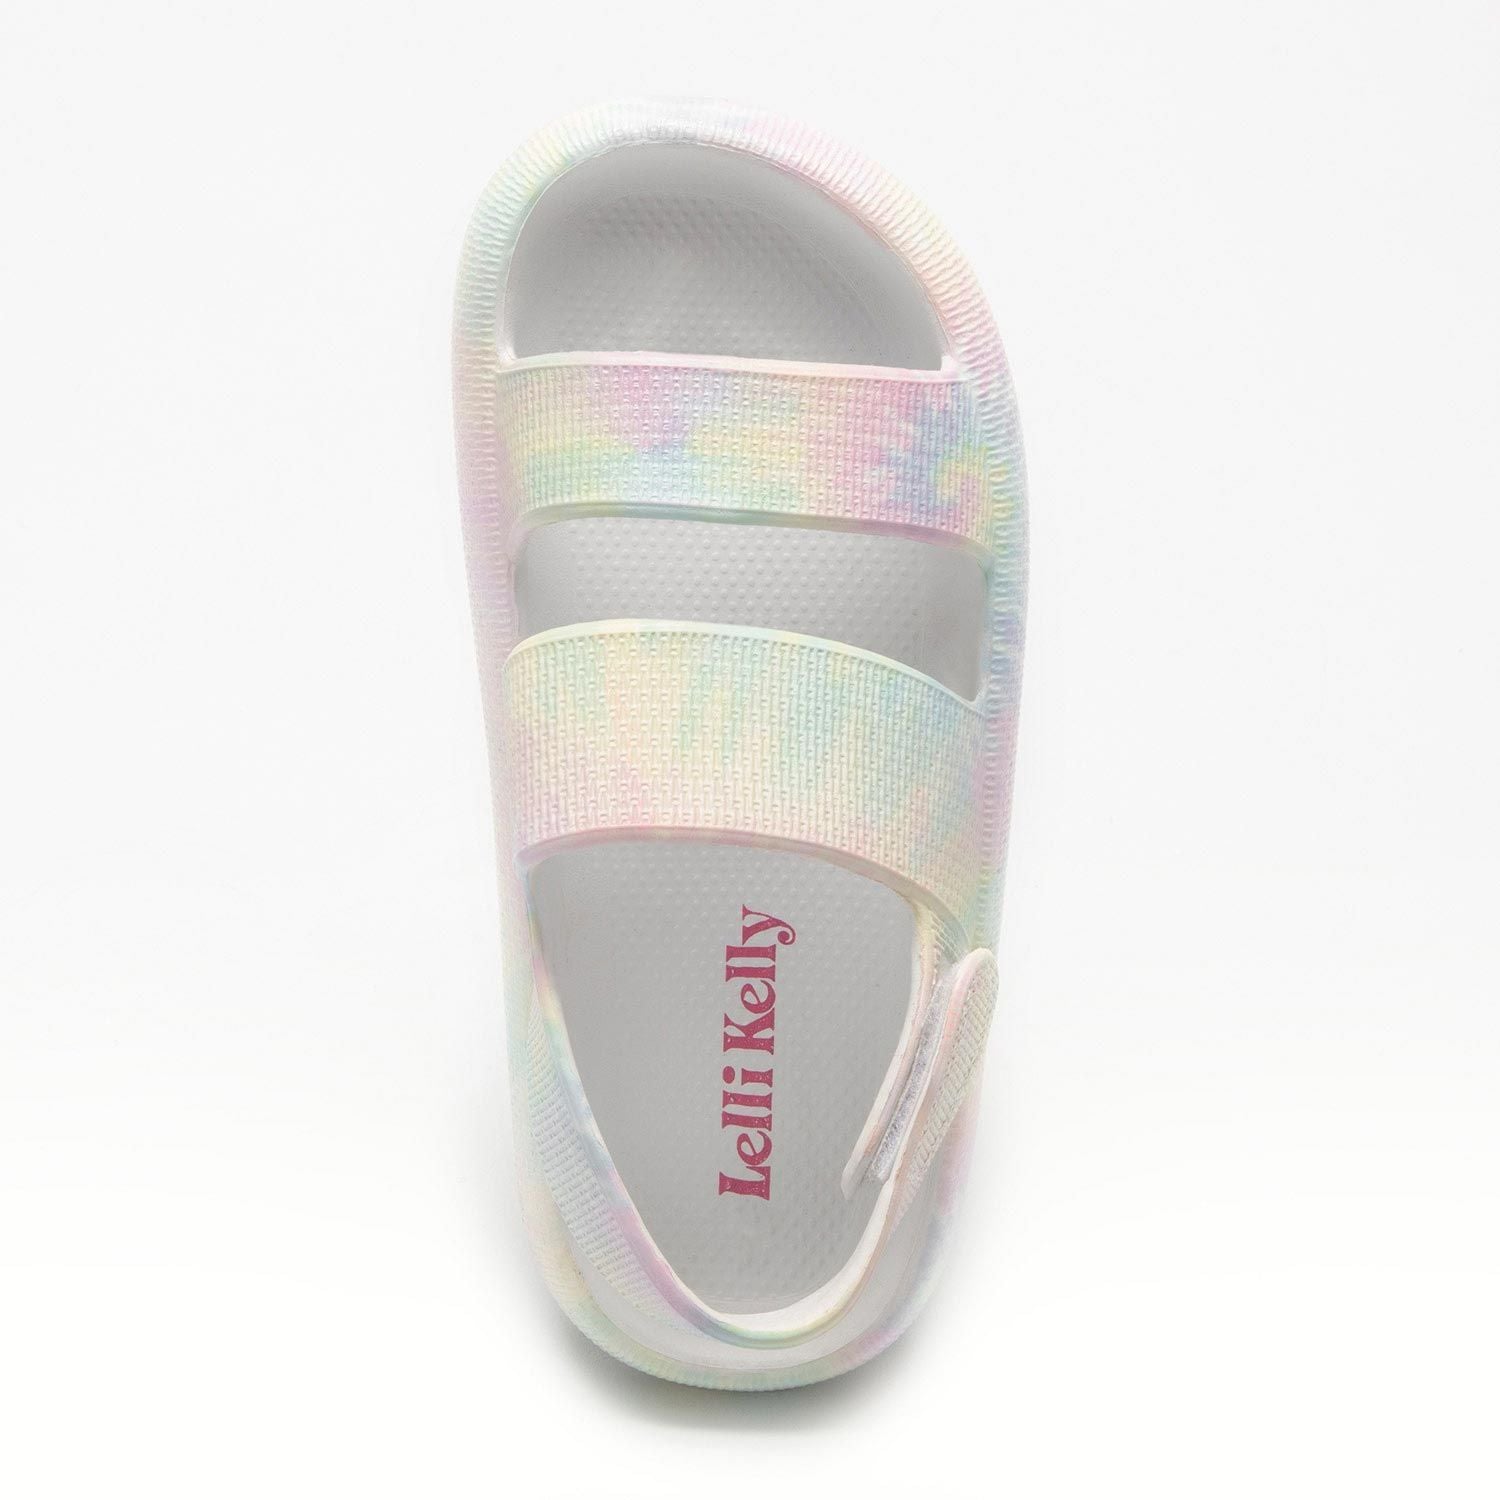 A girls chunky slip on open toe EVA sandal by Lelli Kelly, style LK3638 Kaya, in white pastel multi.  Top view.